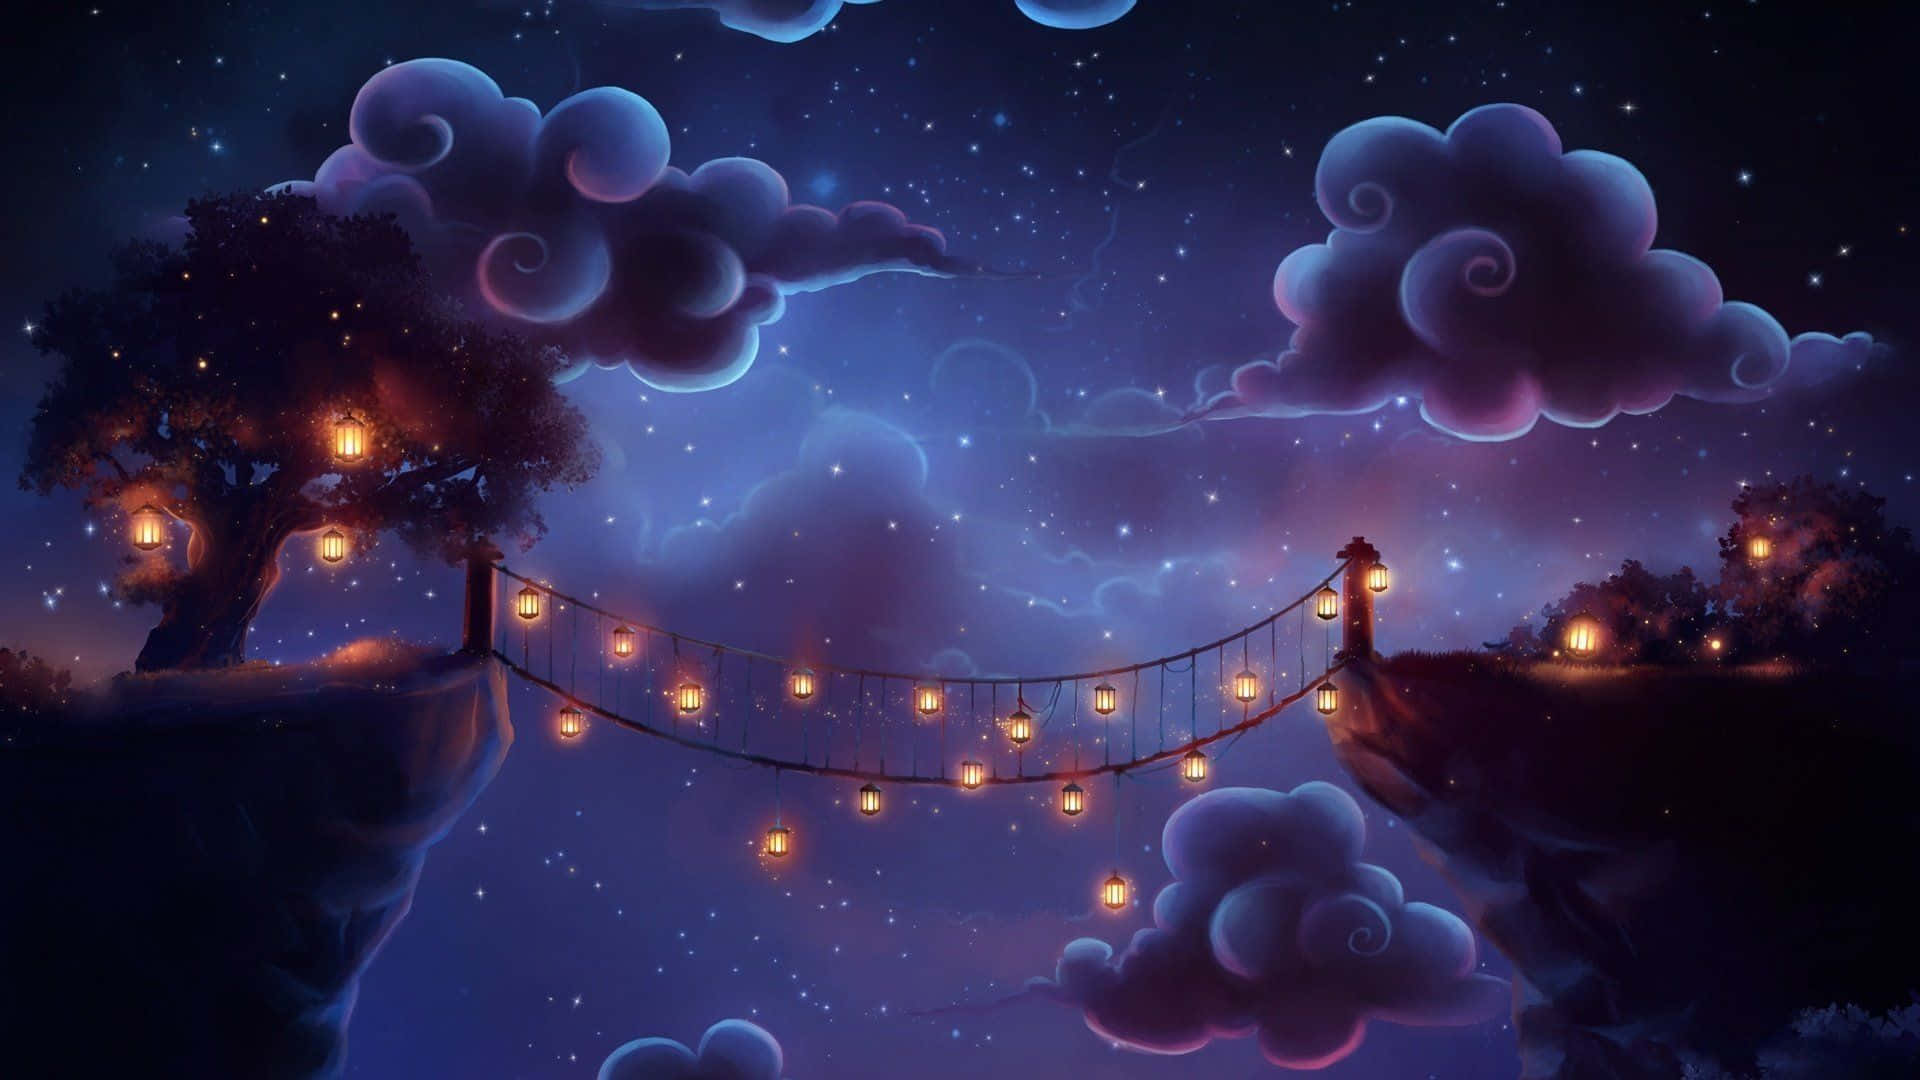 Beautiful Magical Night Sky With Many Lanterns On Bridge Wallpaper